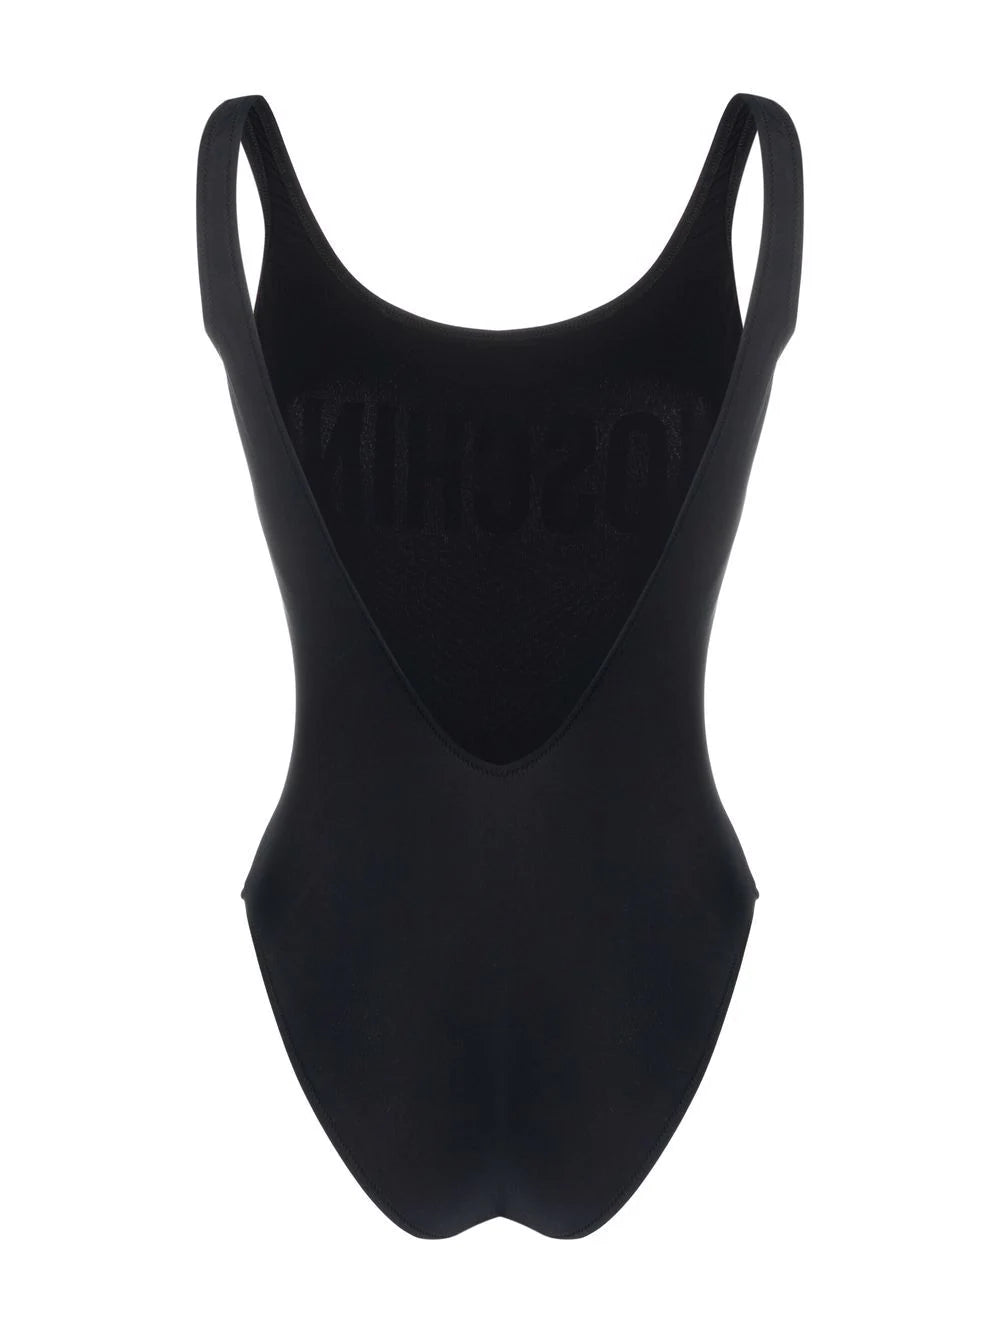 Moschino Logo Black Swimsuit